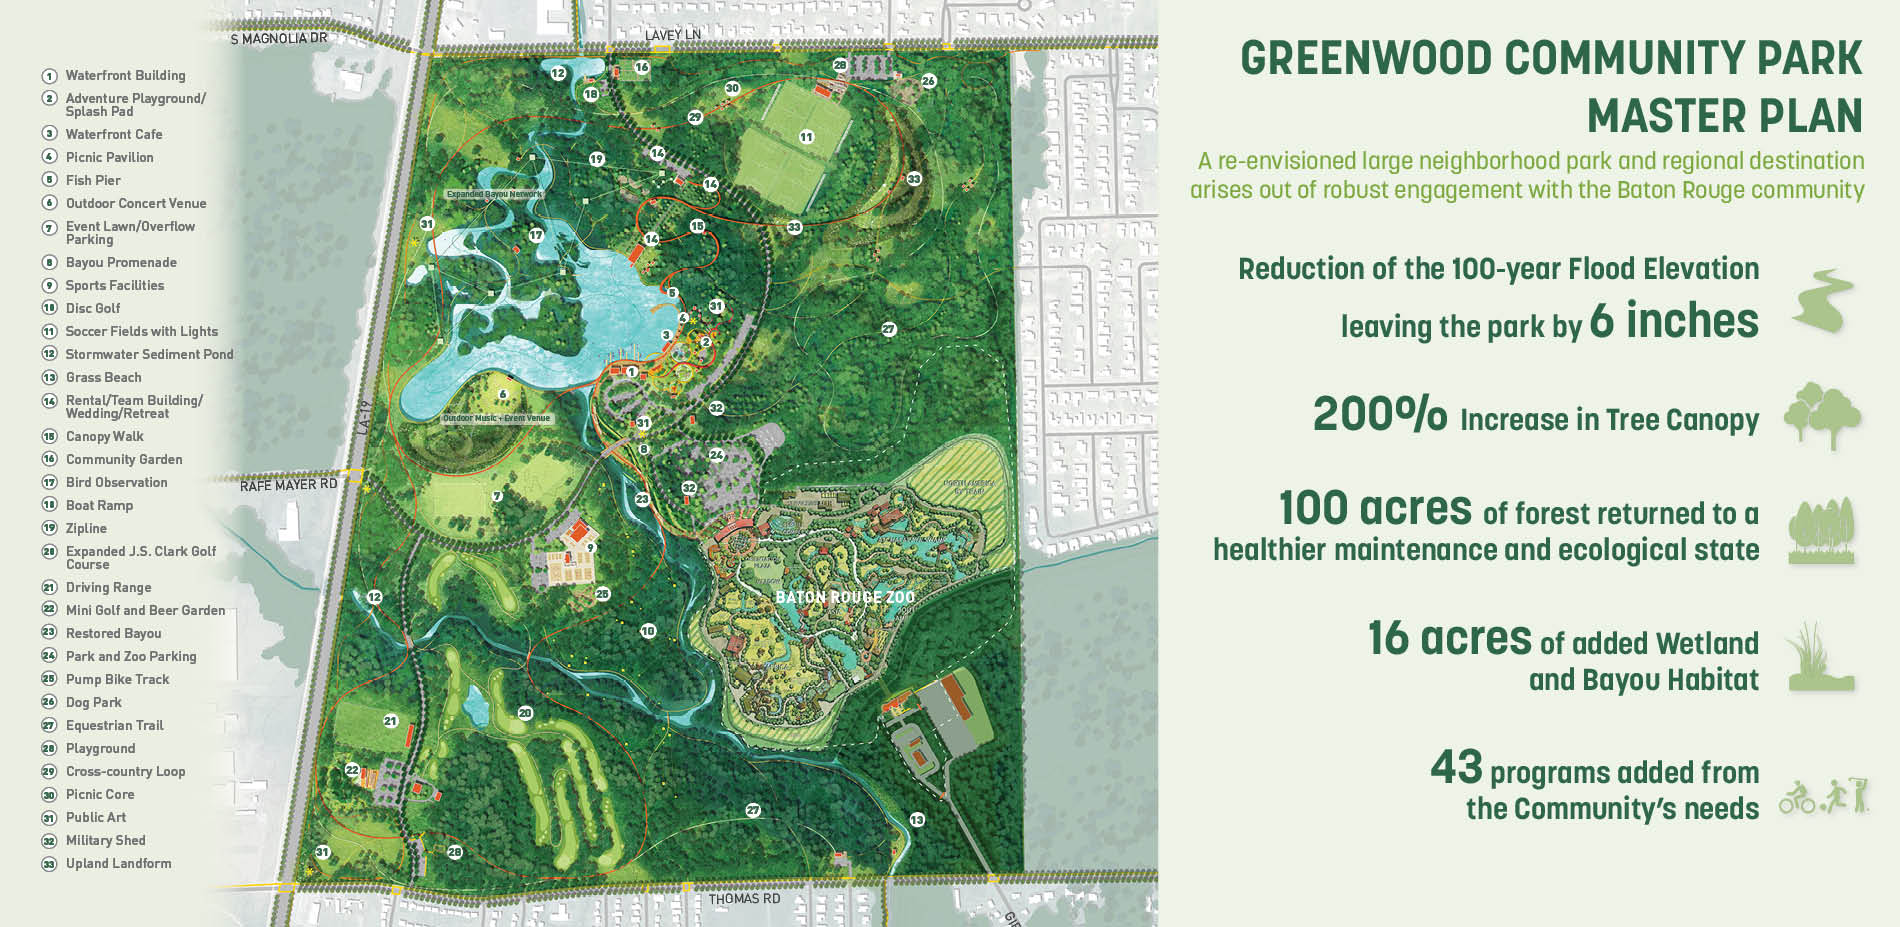 Greenwood Community Park Master Plan